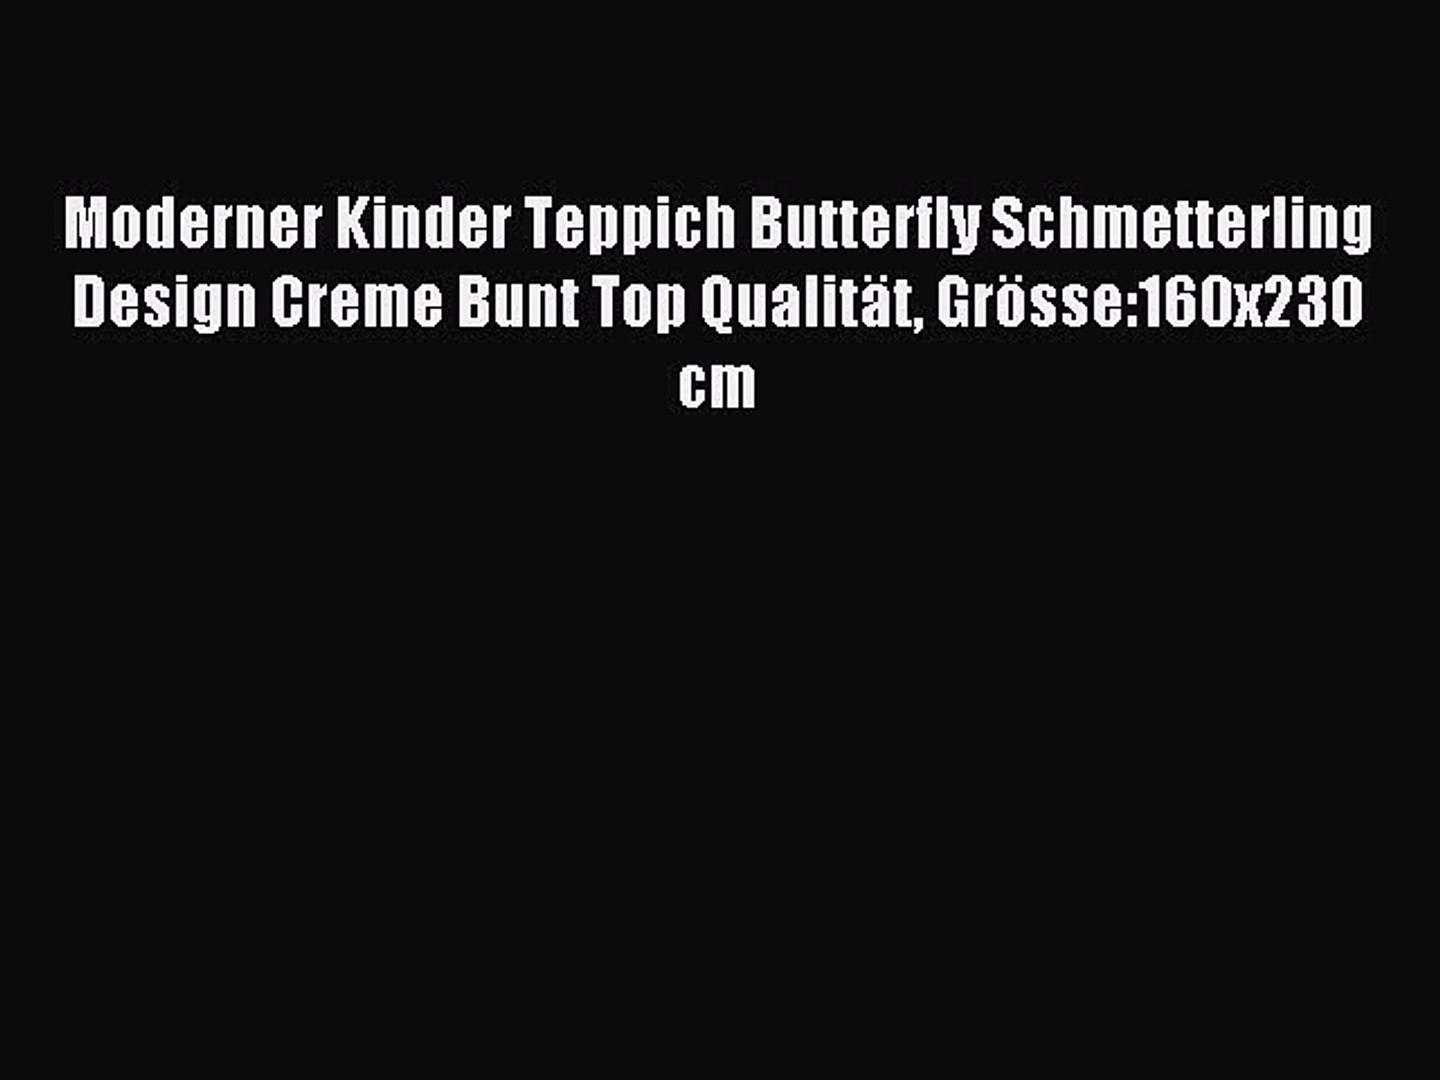 Moderner Kinder Teppich Butterfly Schmetterling Design in Lila Top Qualität